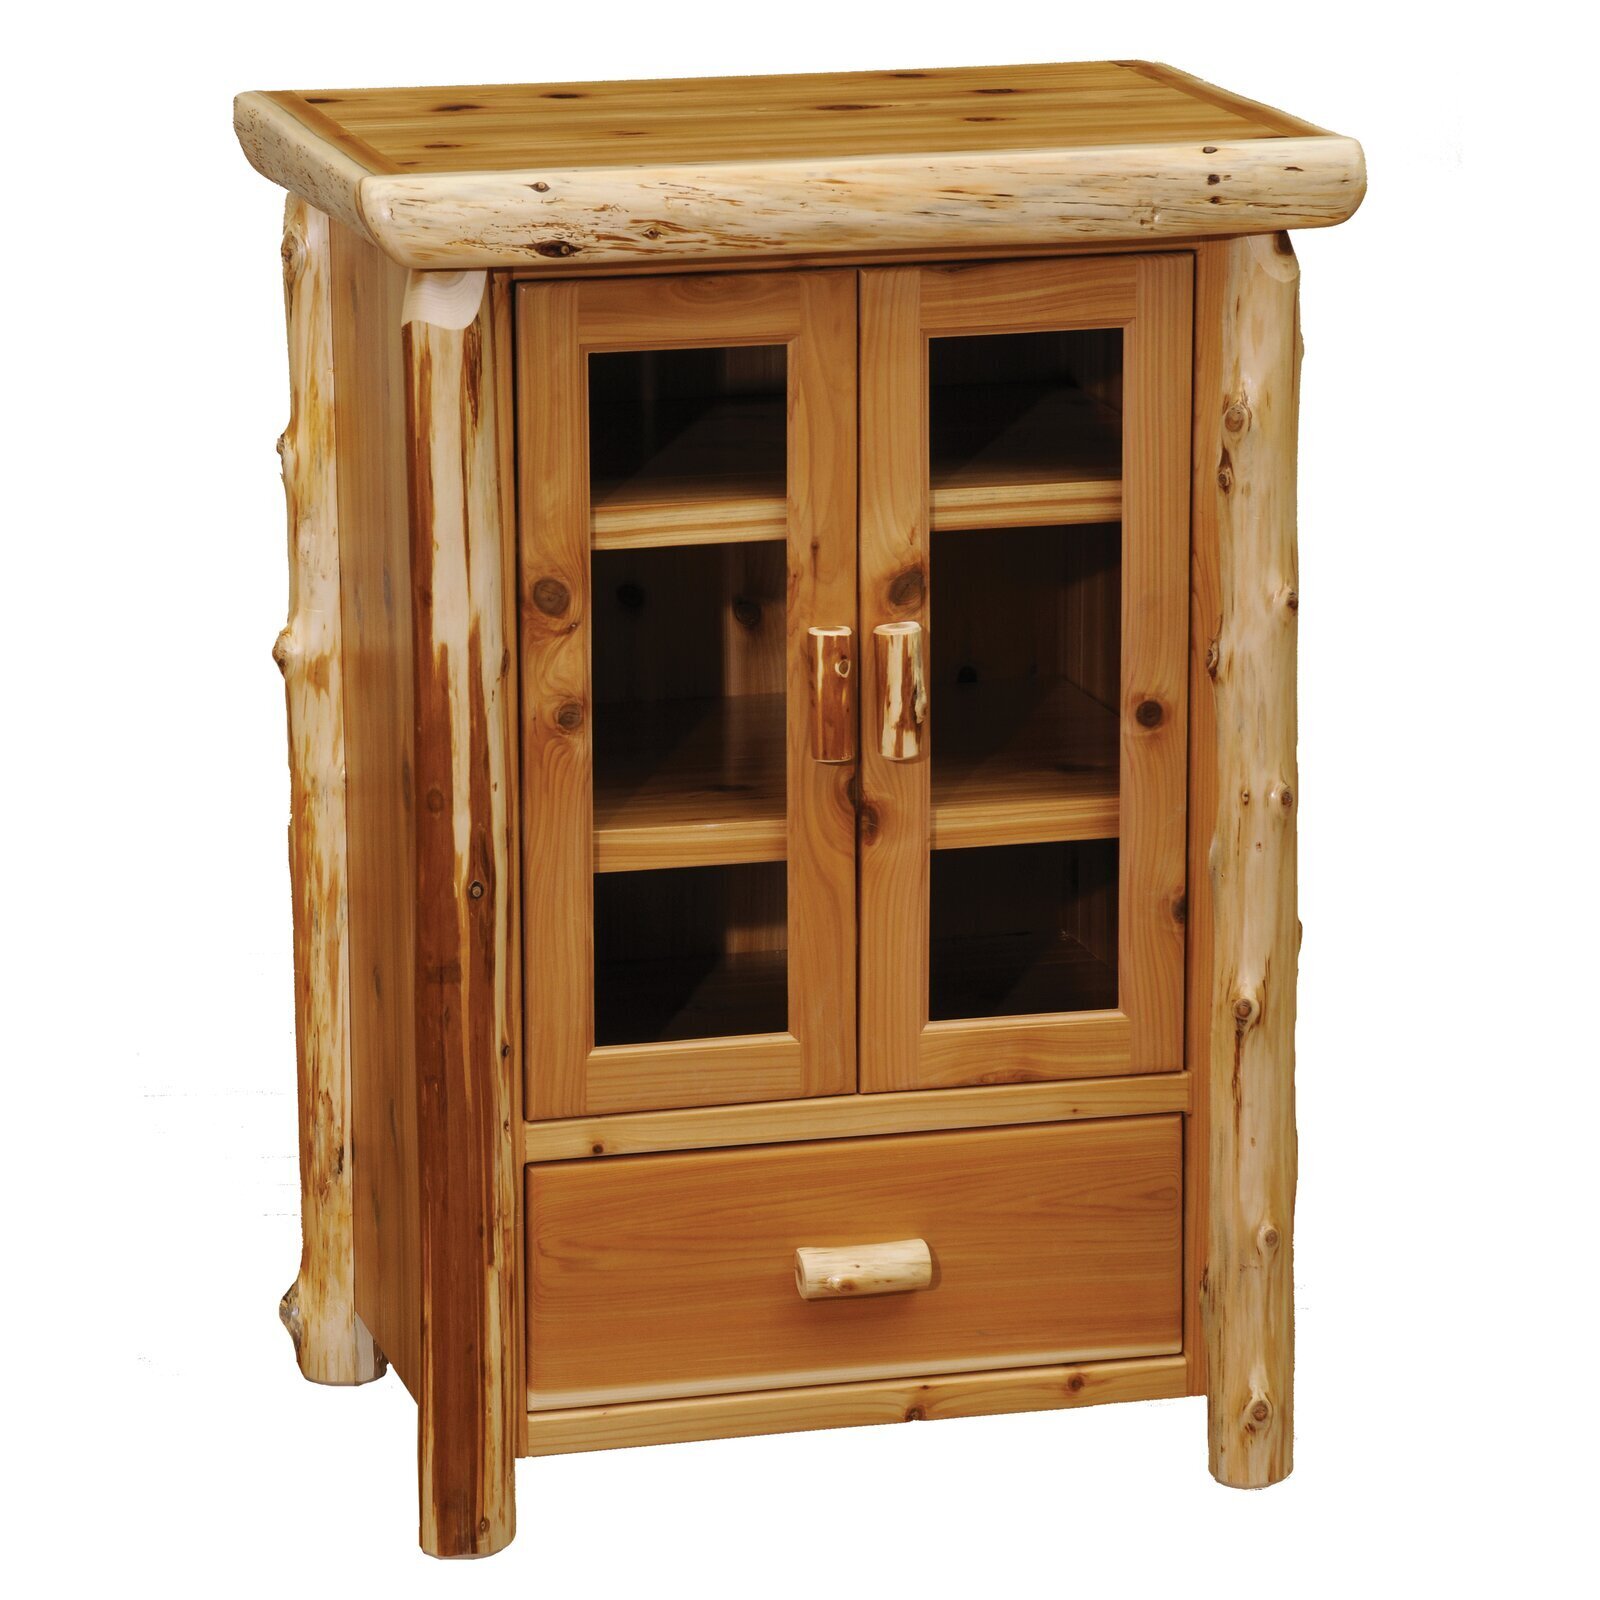 Striking Handcrafted Versatile Cedar Cabinets